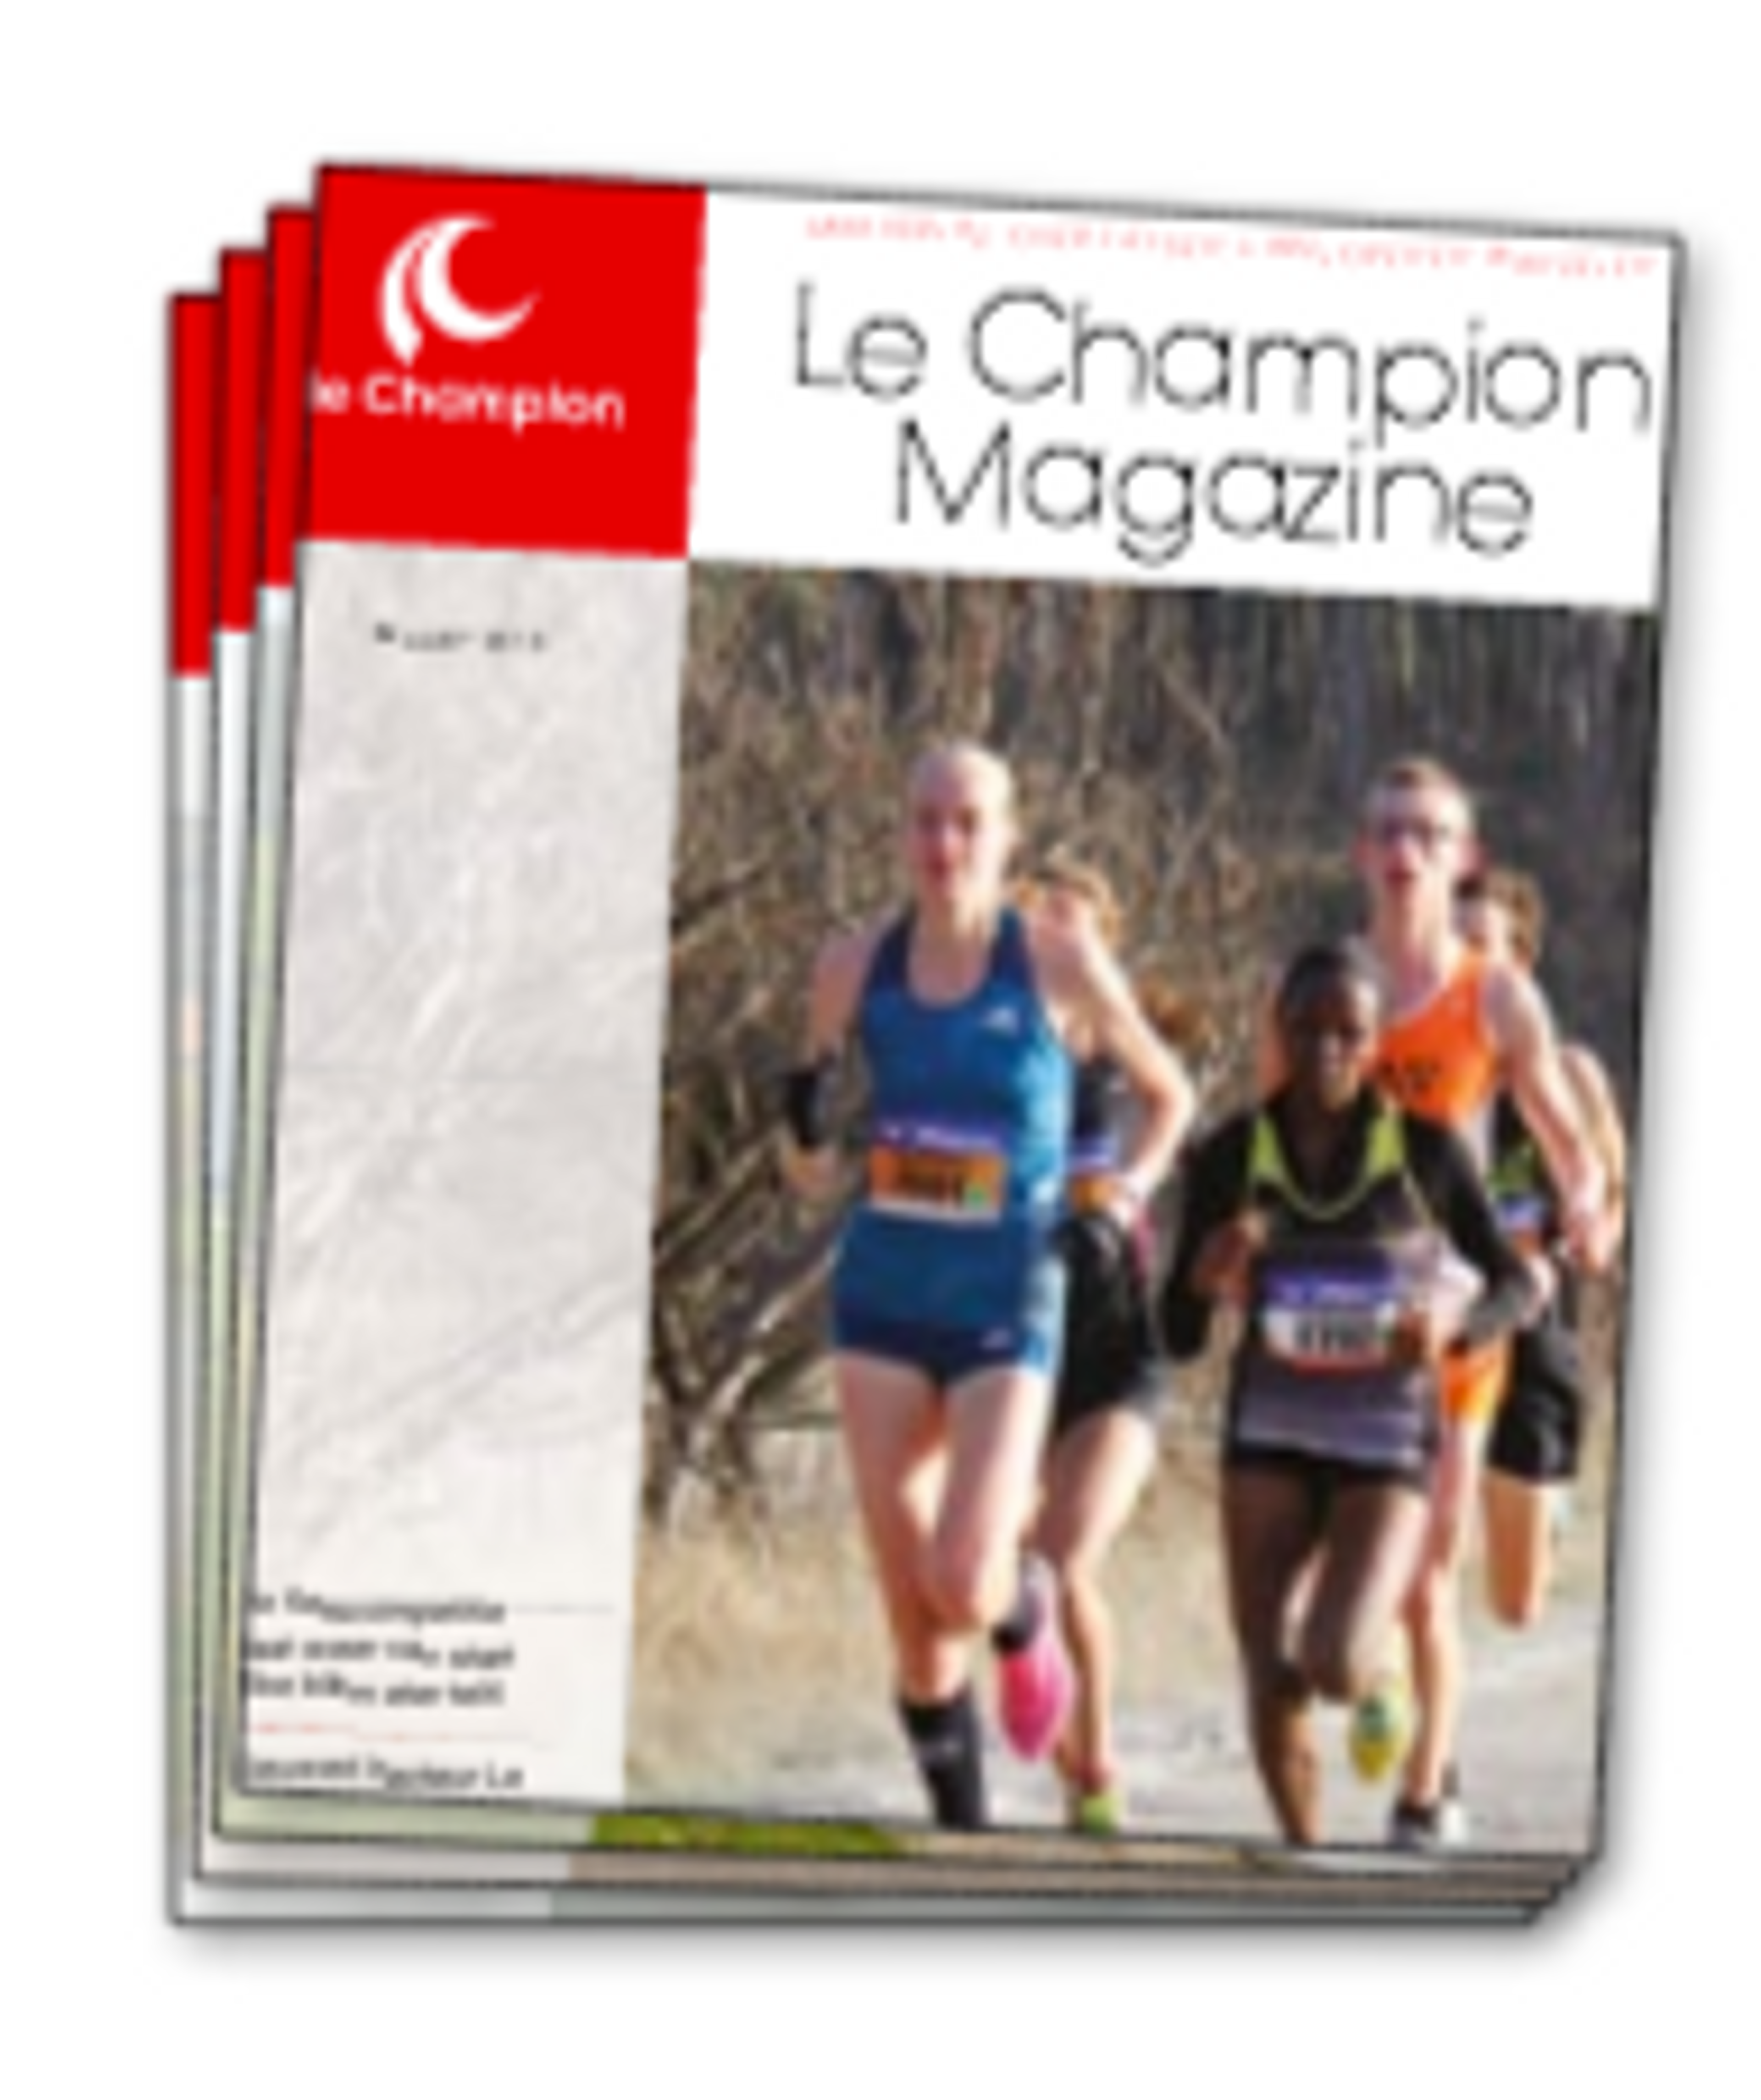 Le Champion Magazine naar WPG Media